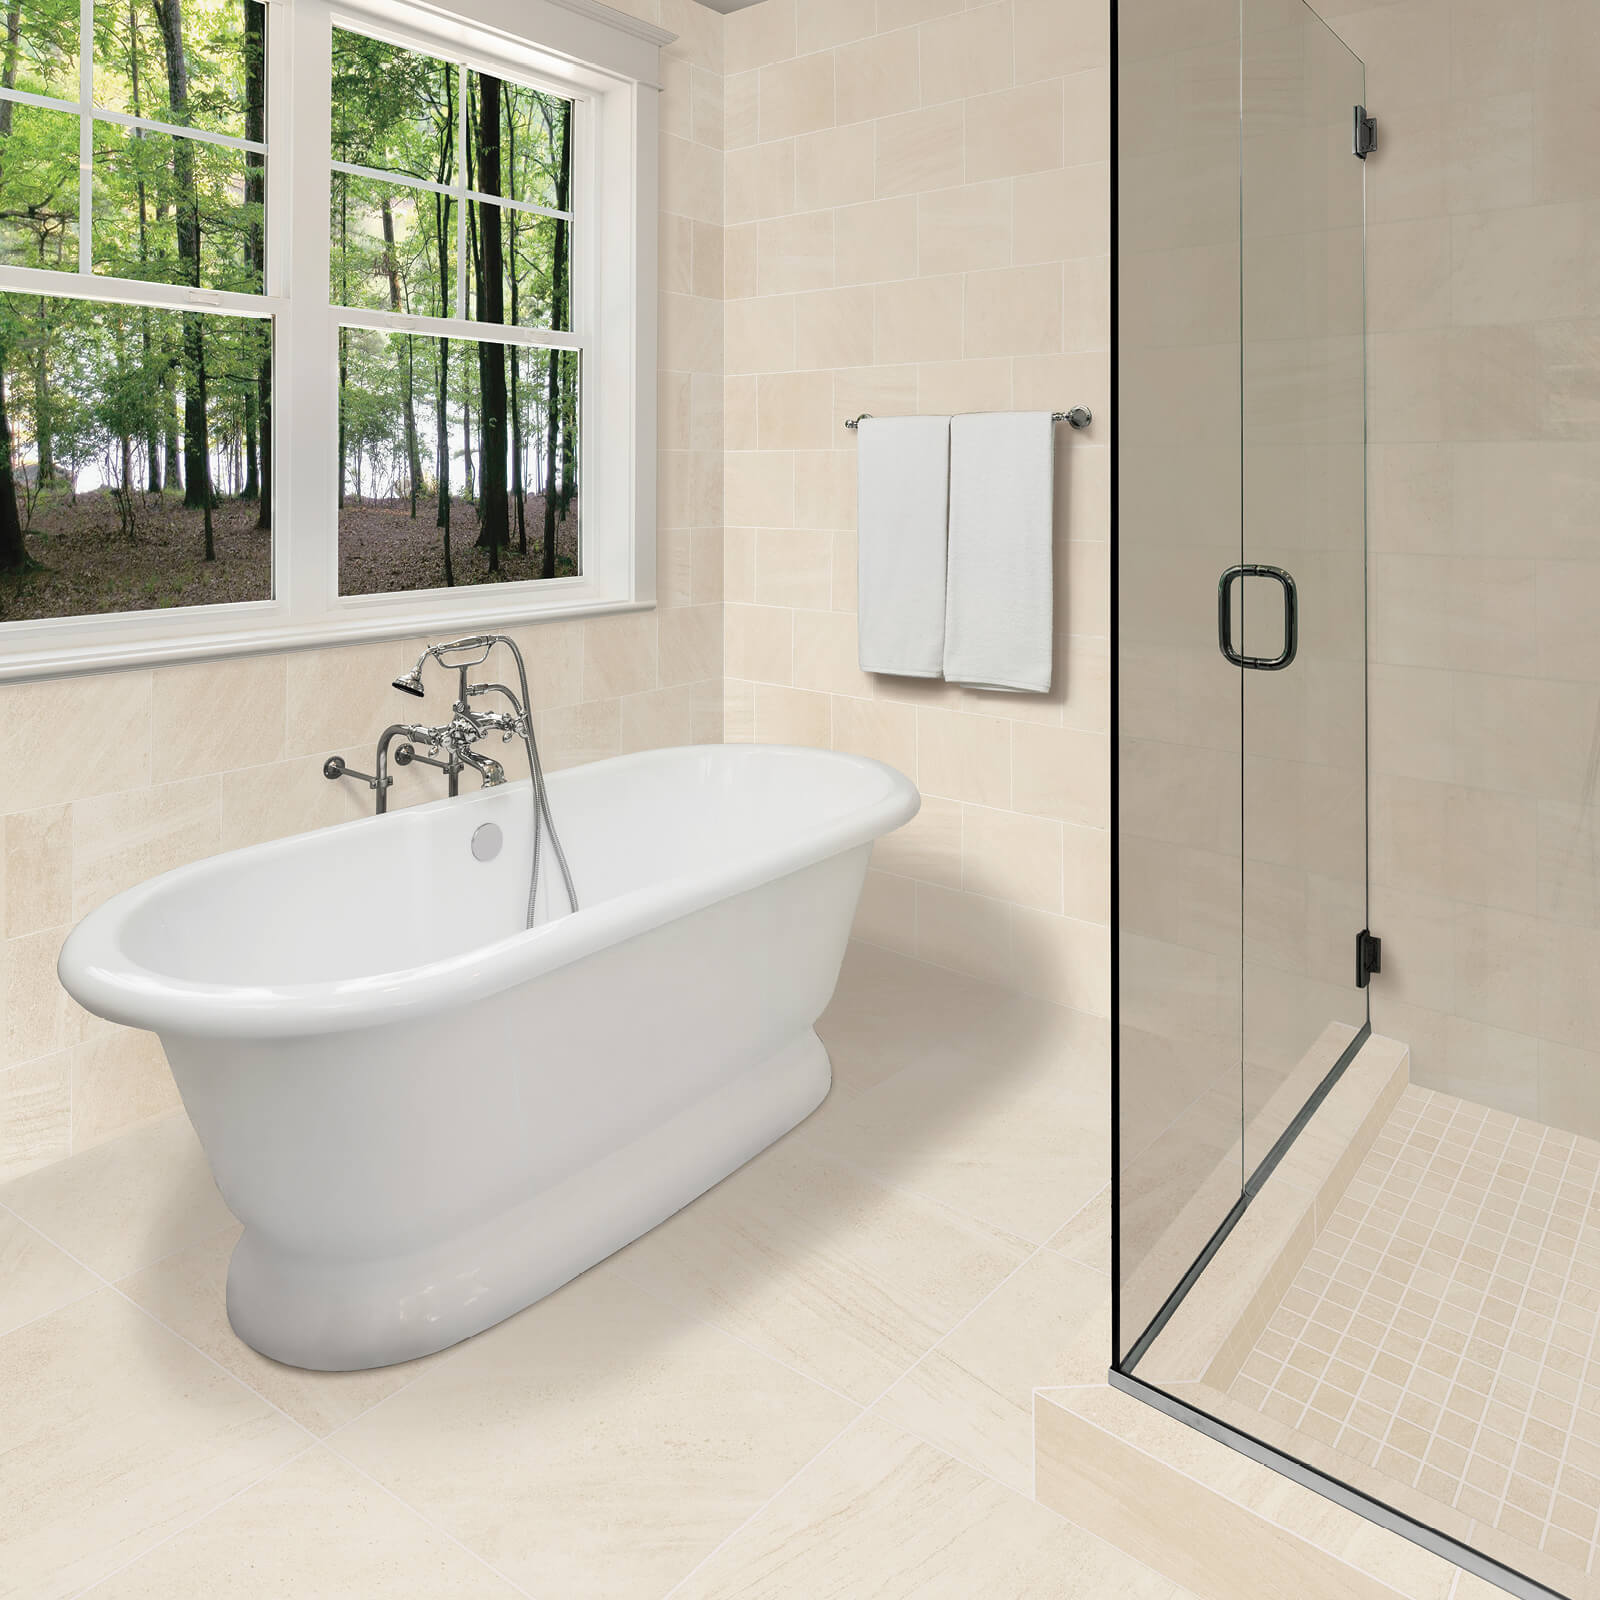 Shower room tiles | Carpetland USA